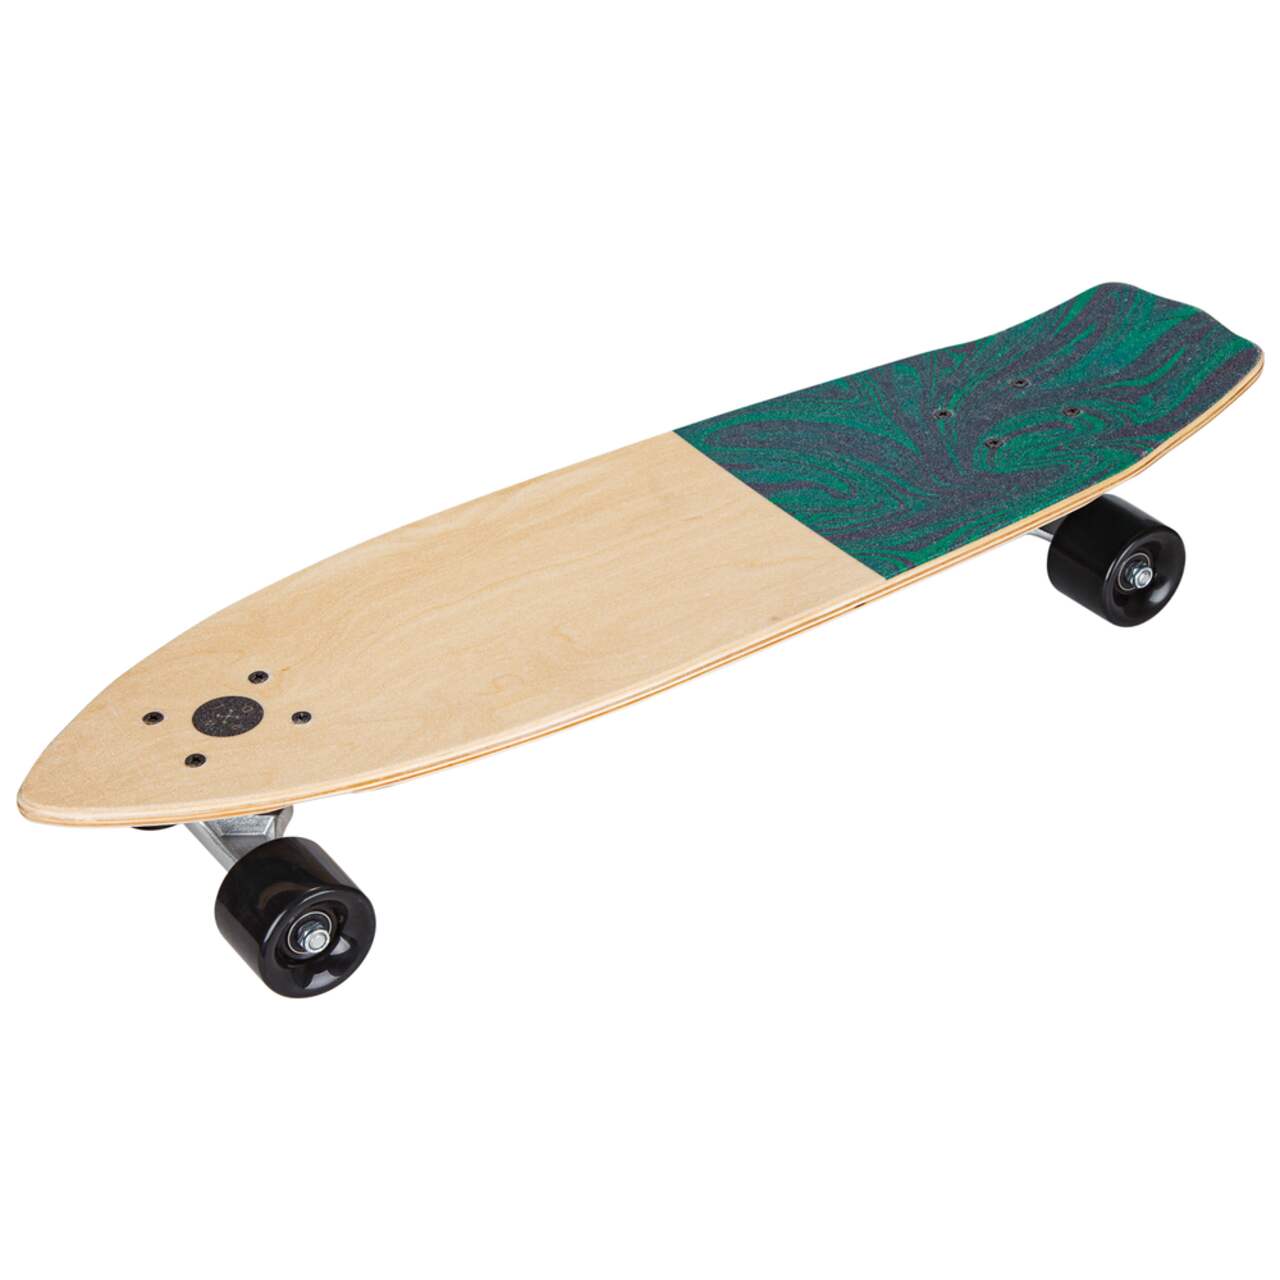 Vintage-Antique Wood/Wooden Skateboard SURFER Sidewalk Surfing w/Metal  Wheels!